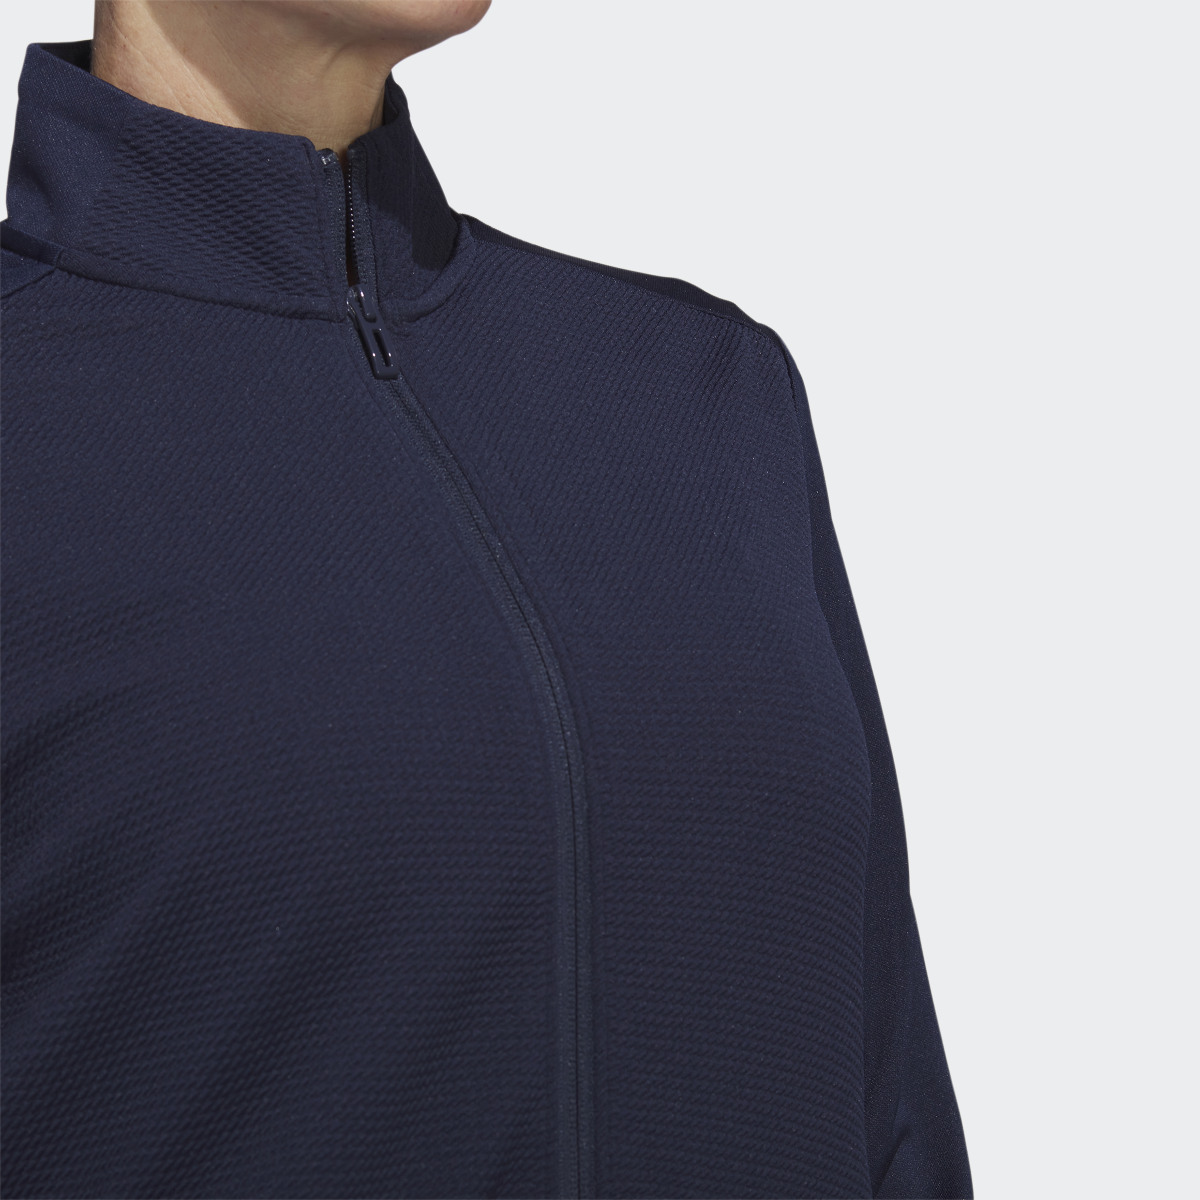 Adidas Textured Full-Zip Jacket. 6